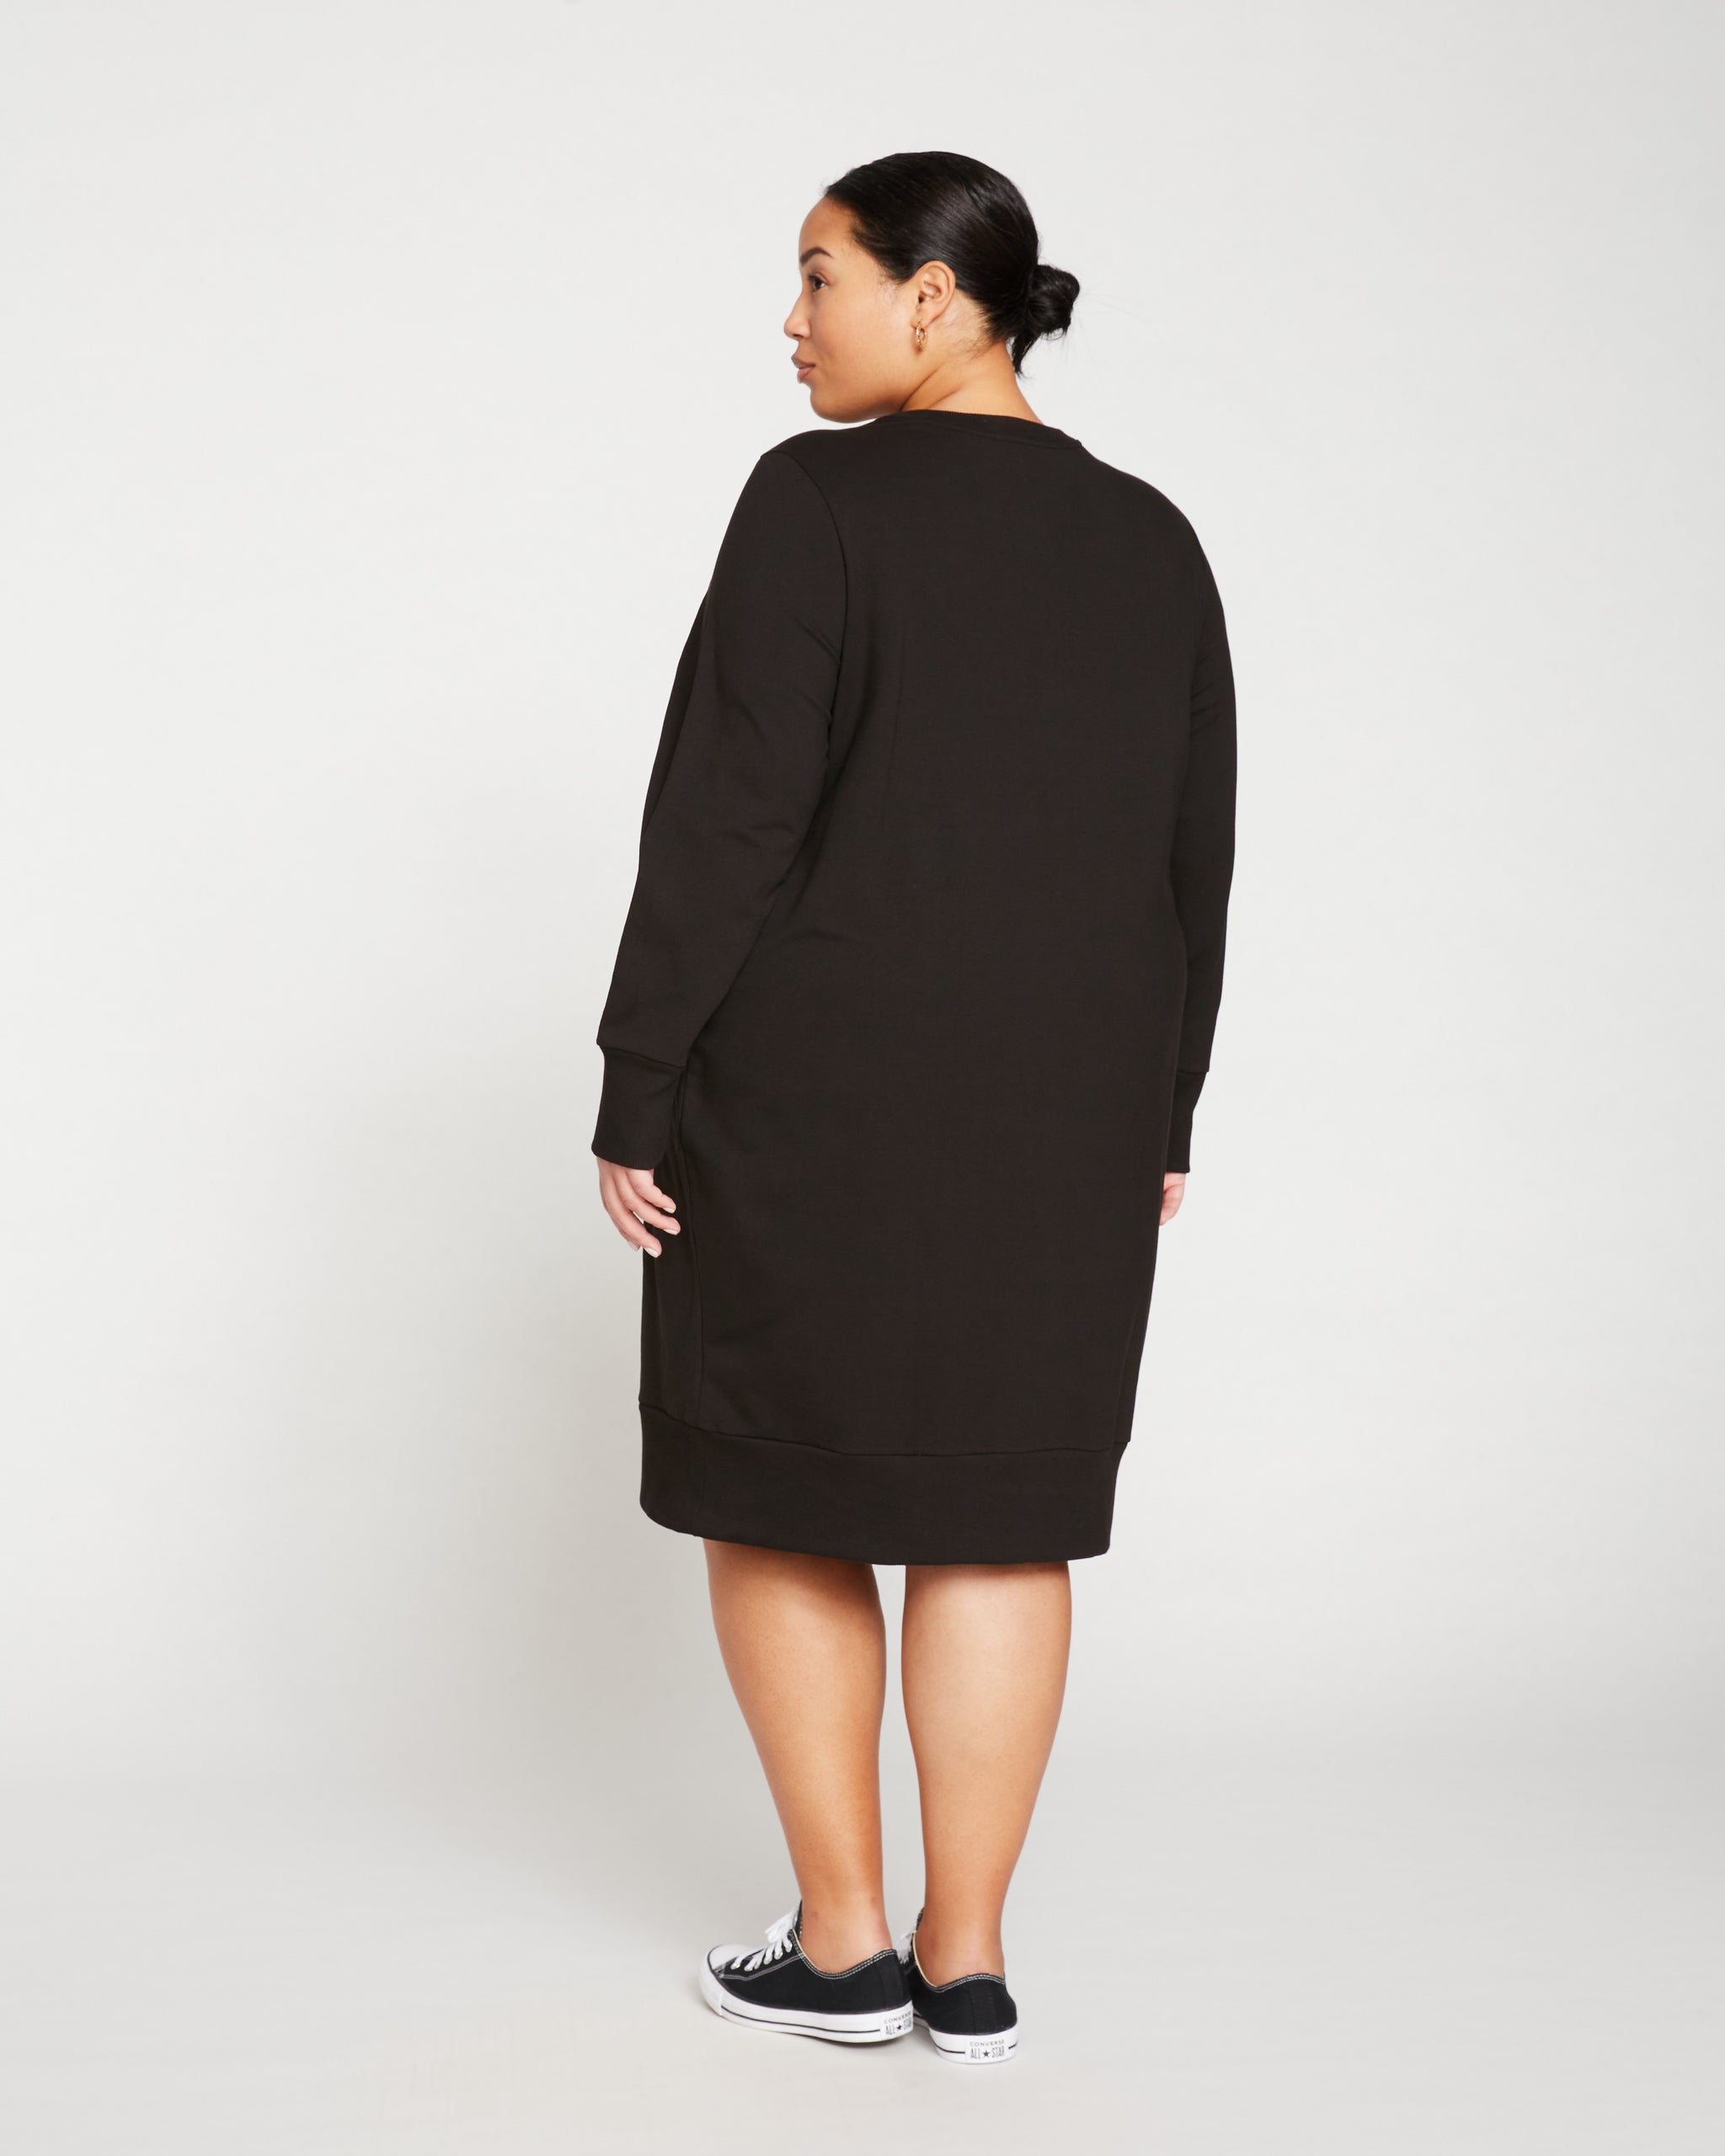 Lululemon Women's Cozy Instincts Dress Color Black Size 4 Stretch